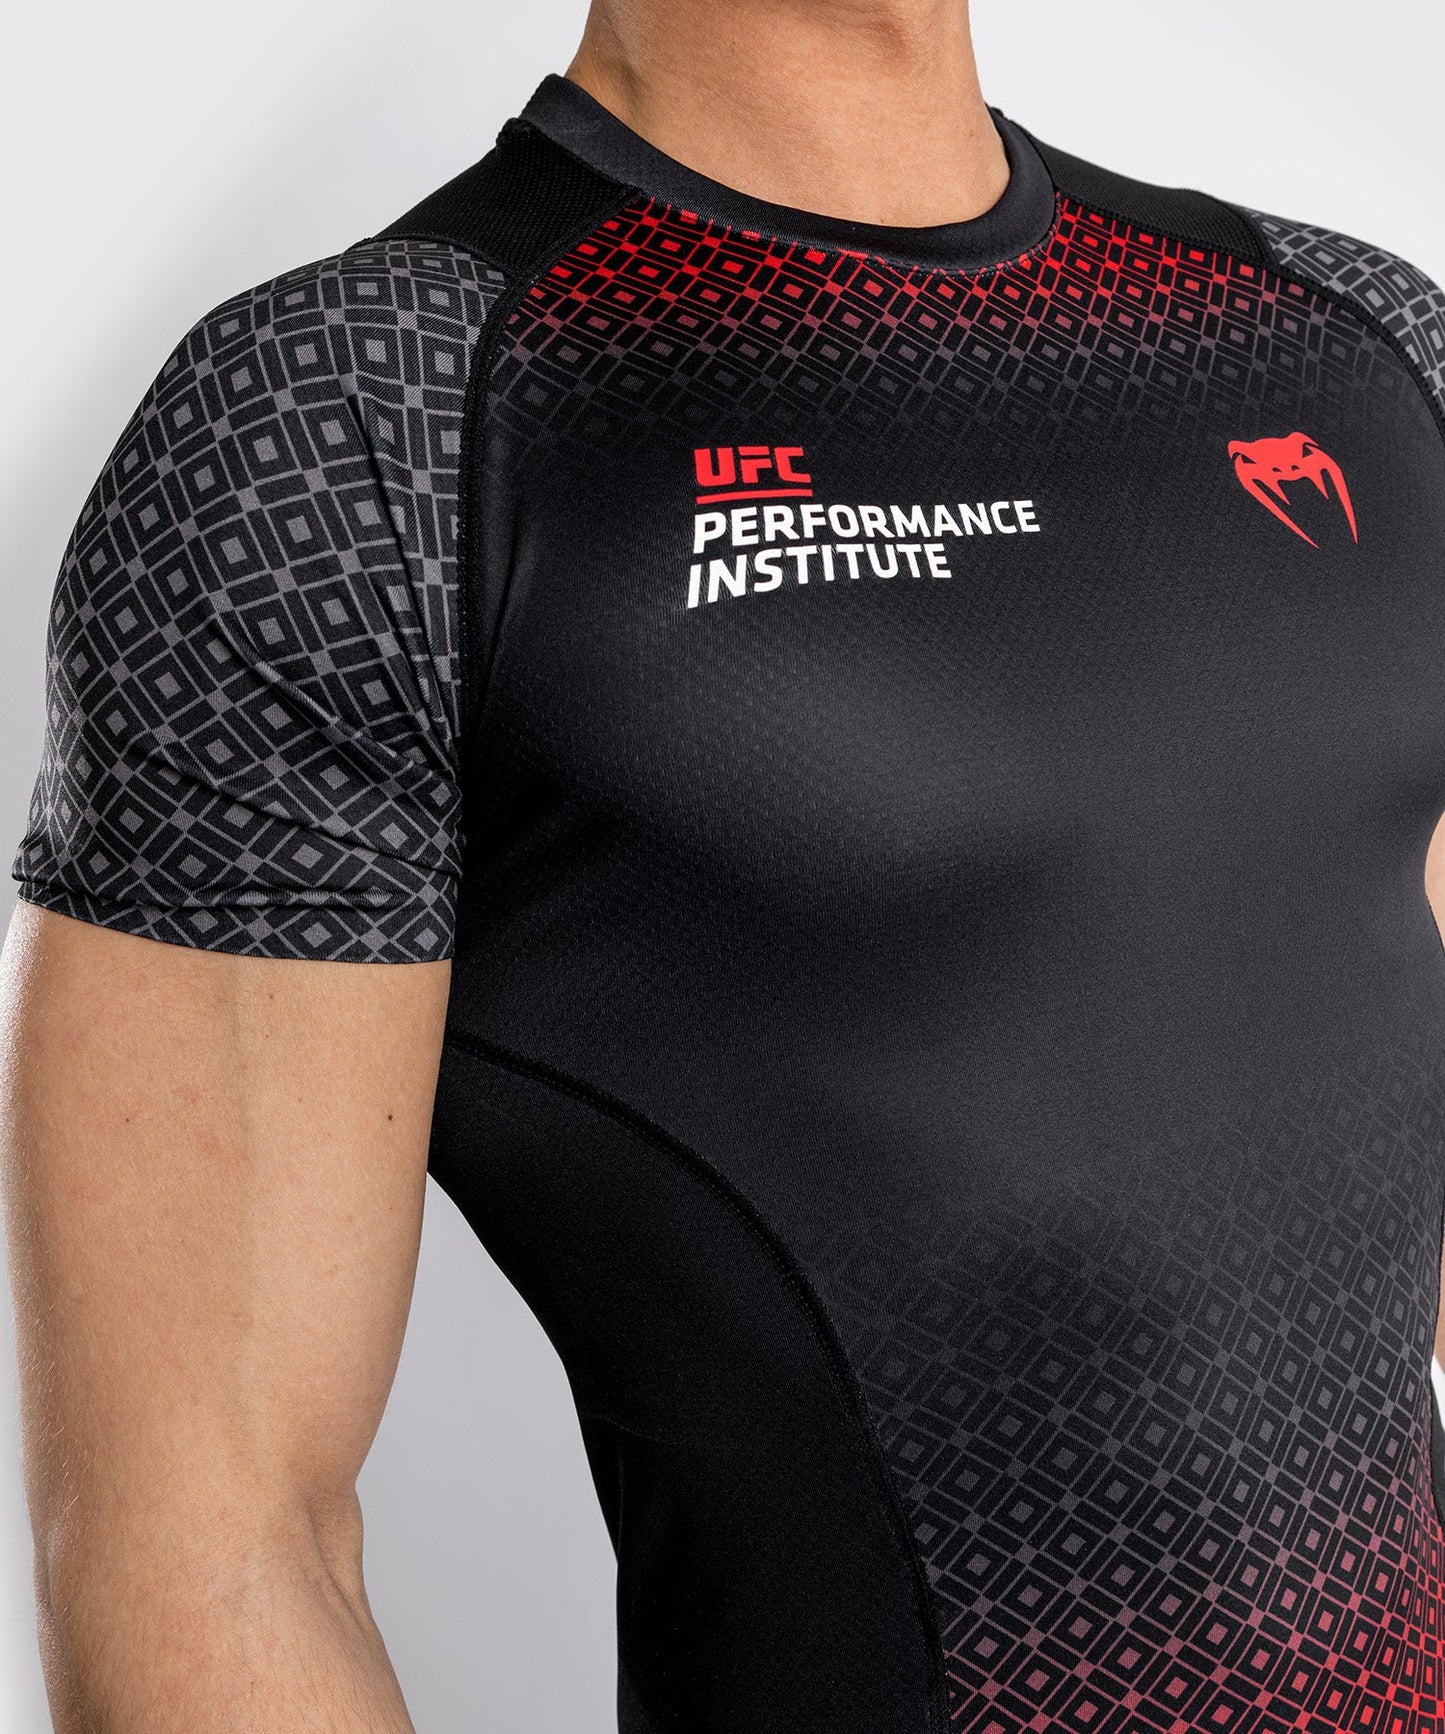 UFC Venum Performance Institute Rashguard - Short Sleeves - Black/Red